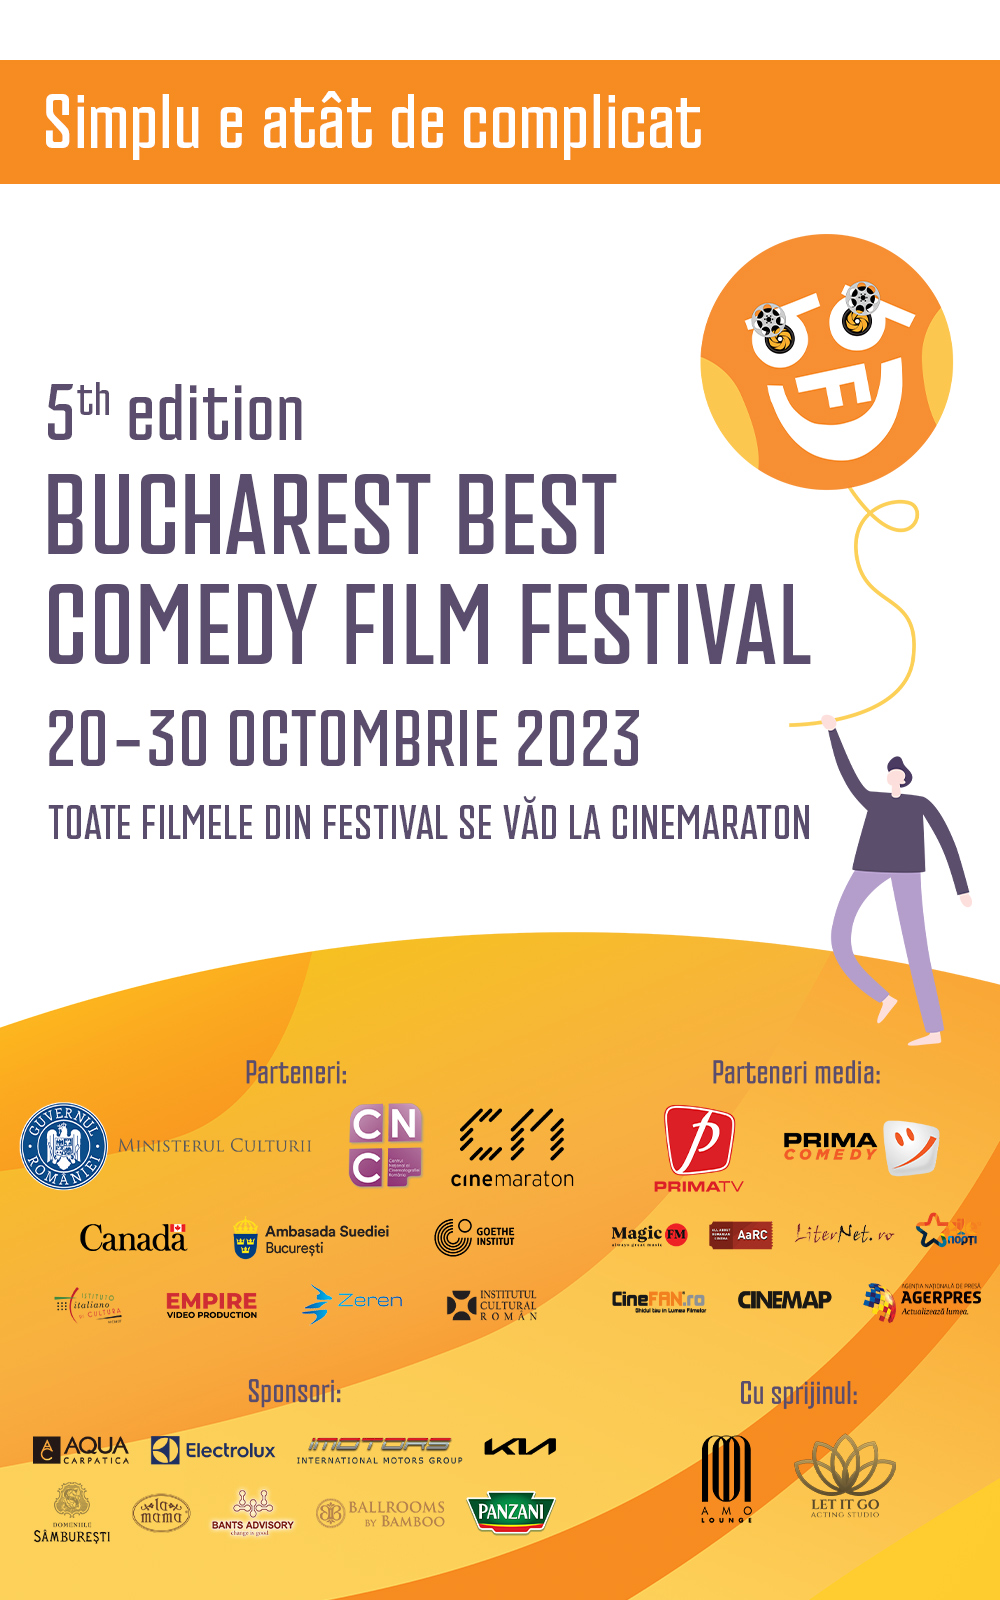 Bucharest Best Comedy Film - Ed. 5